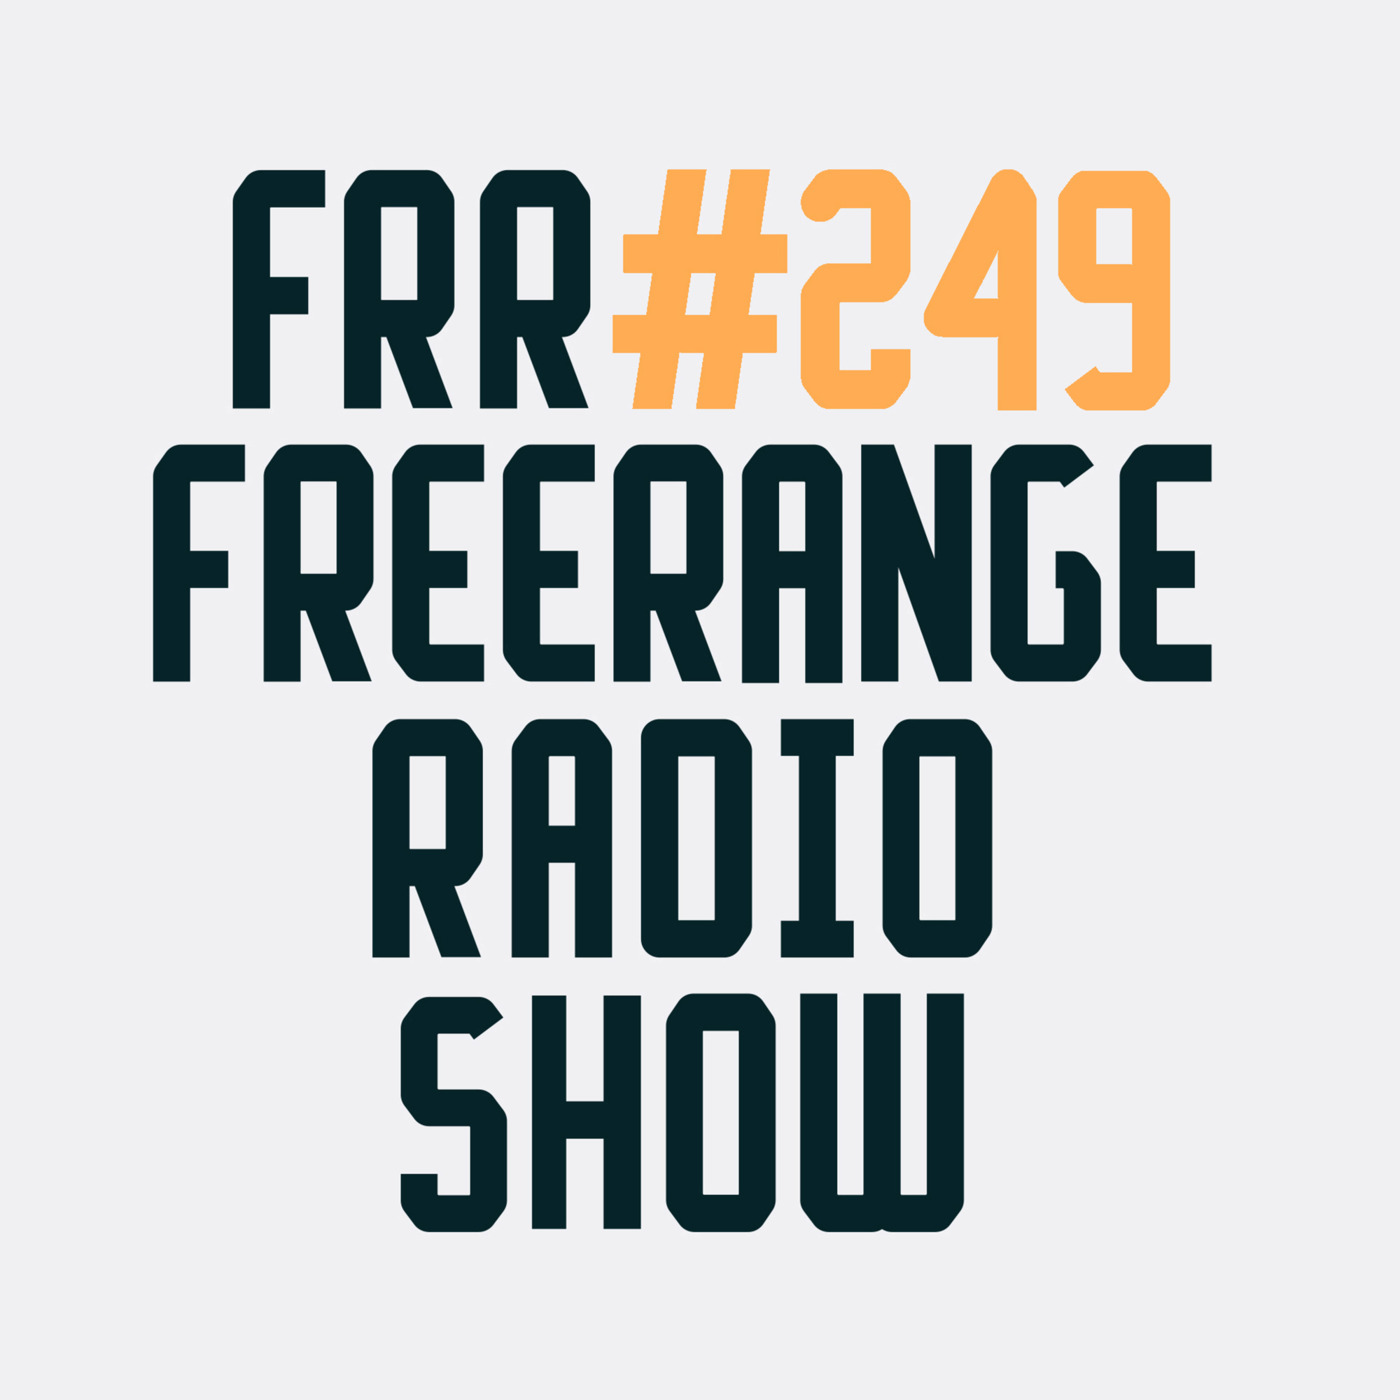 Episode 249: Freerange Records Radioshow No.249 - May 2022 With Matt Masters